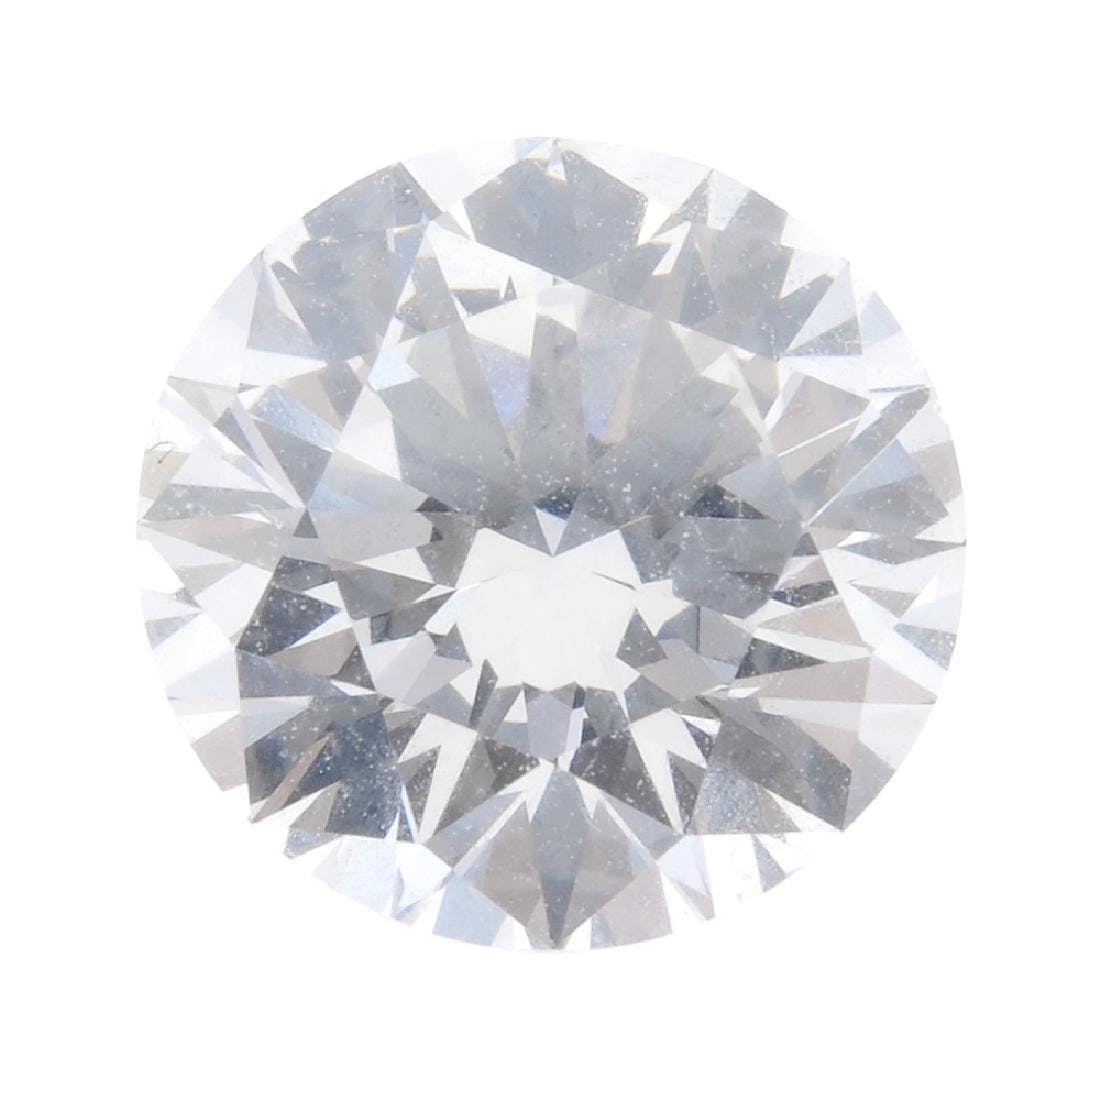 HPHT diamond - H color